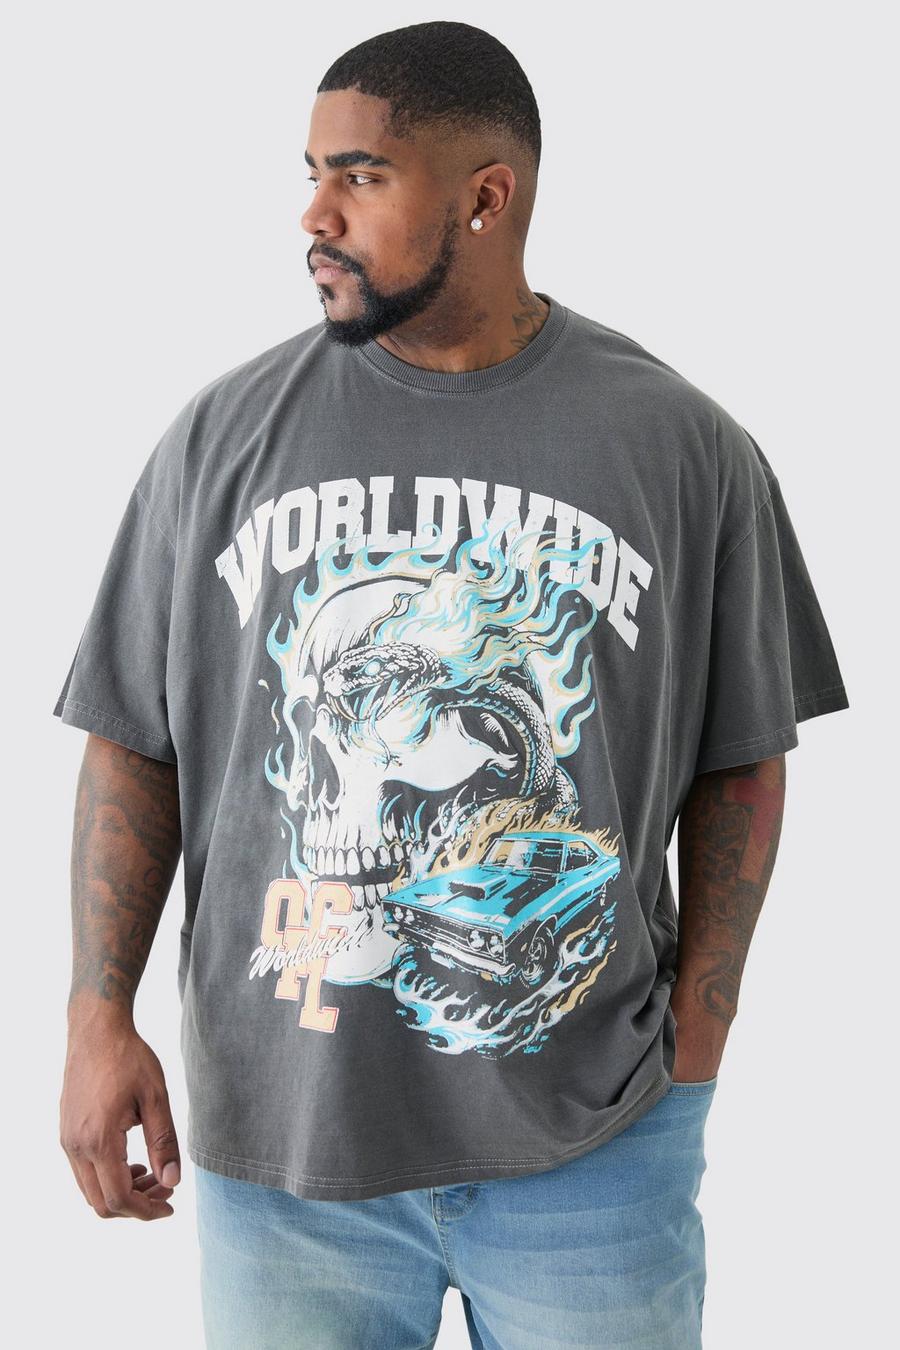 Grande taille - T-shirt à imprimé Worldwide, Grey